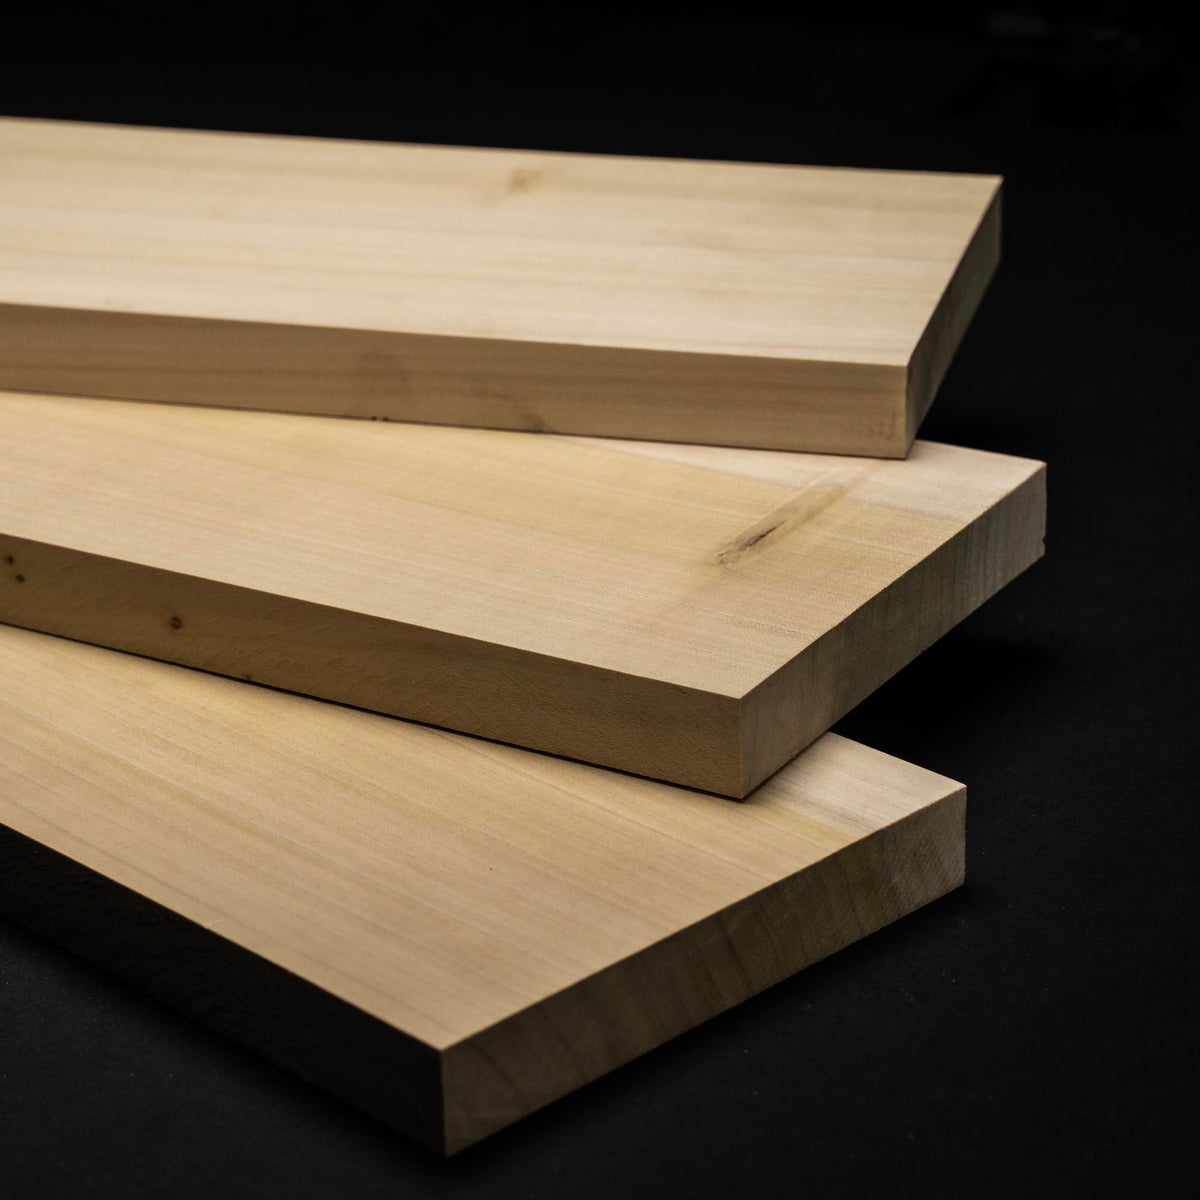 1-in Poplar Lumber Boards - cut to size